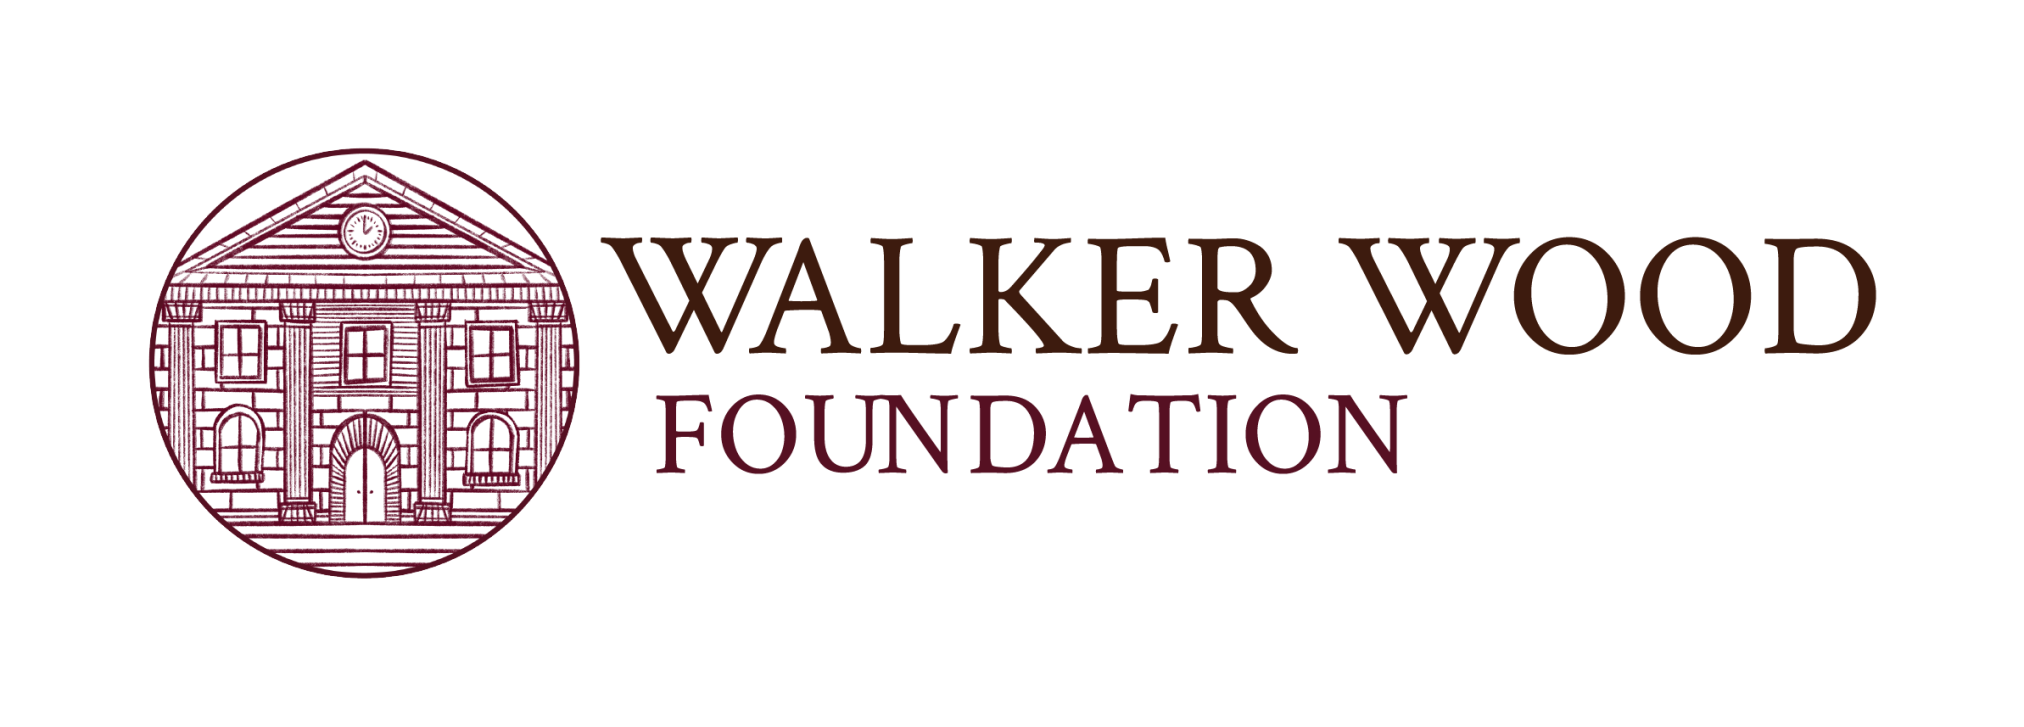 Walker Wood Foundation Logo